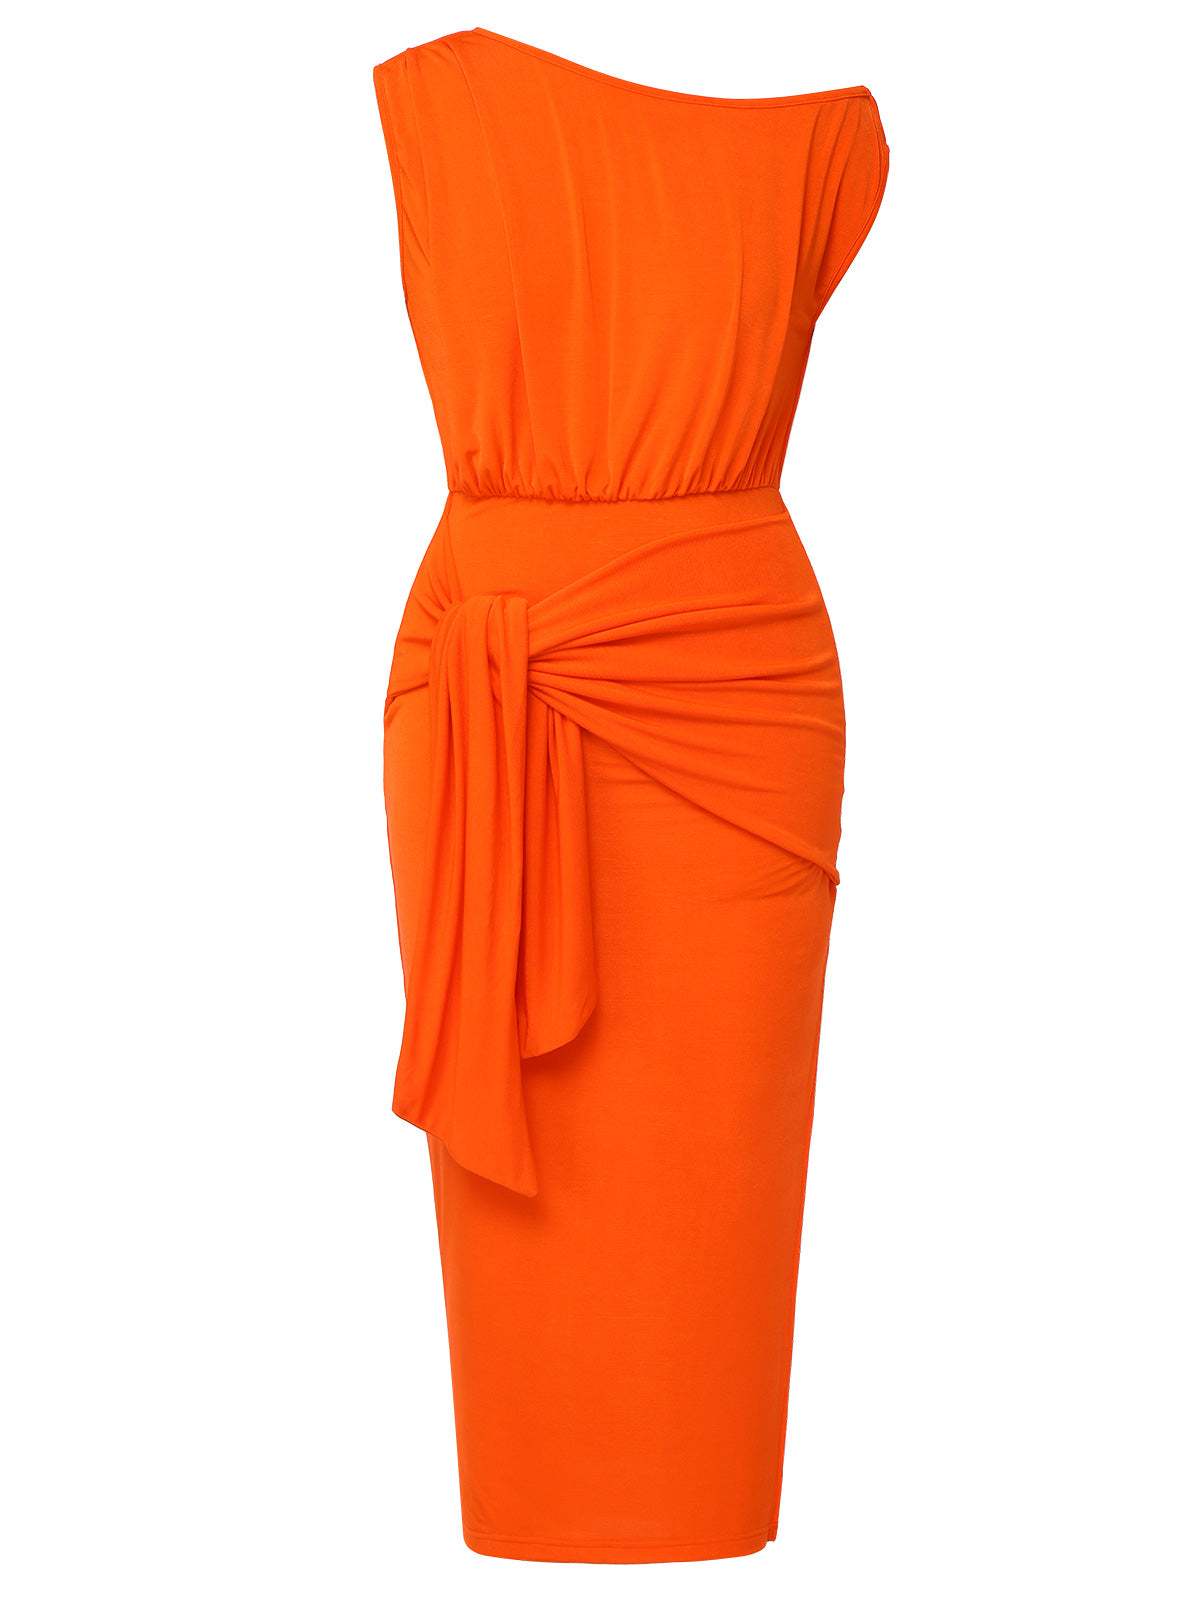 Orange 1960s Solid One Shoulder Sleeveless Dress